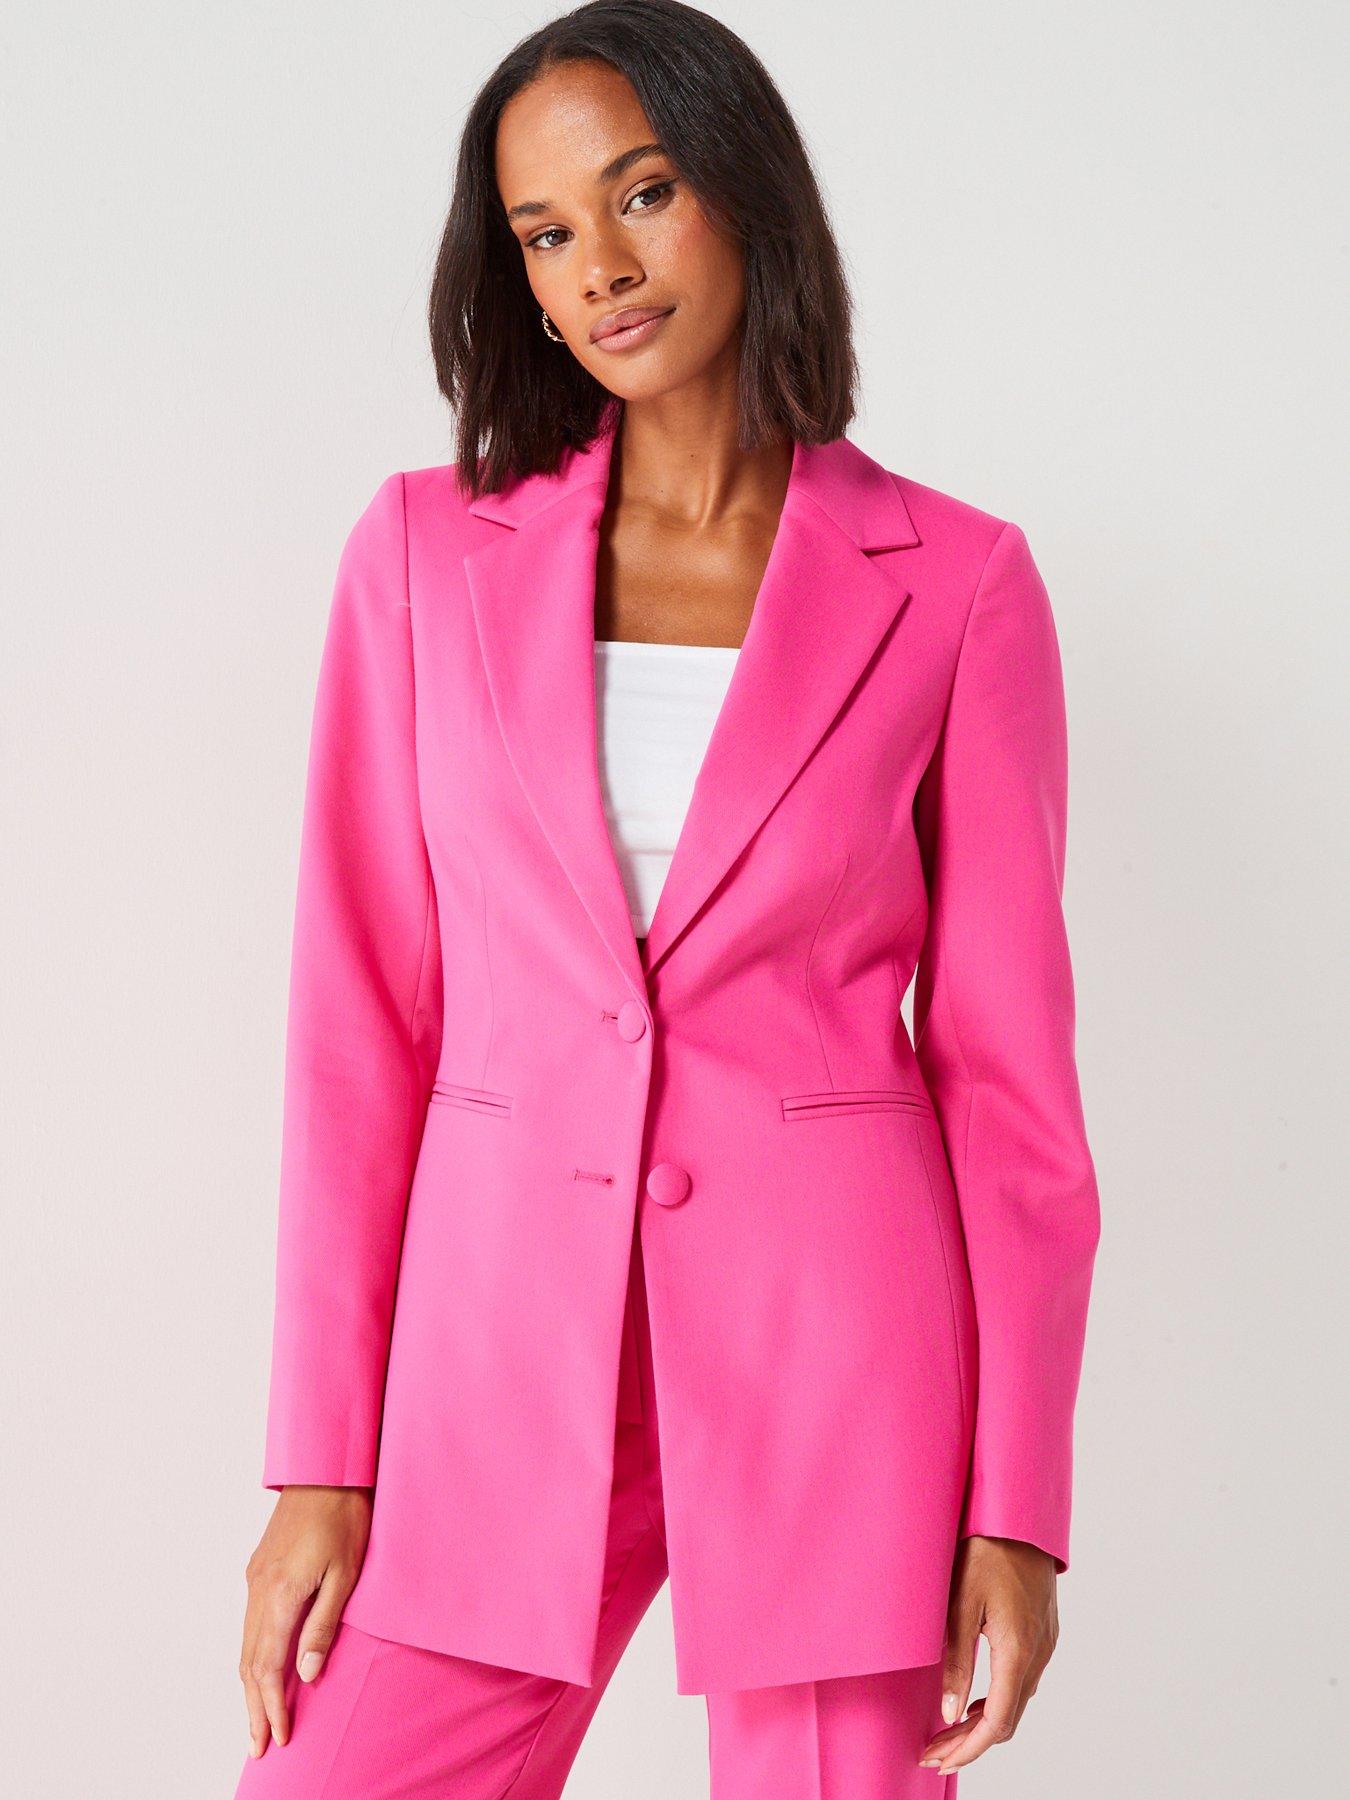 Women's Pink Blazers, Hot & Bright Pink